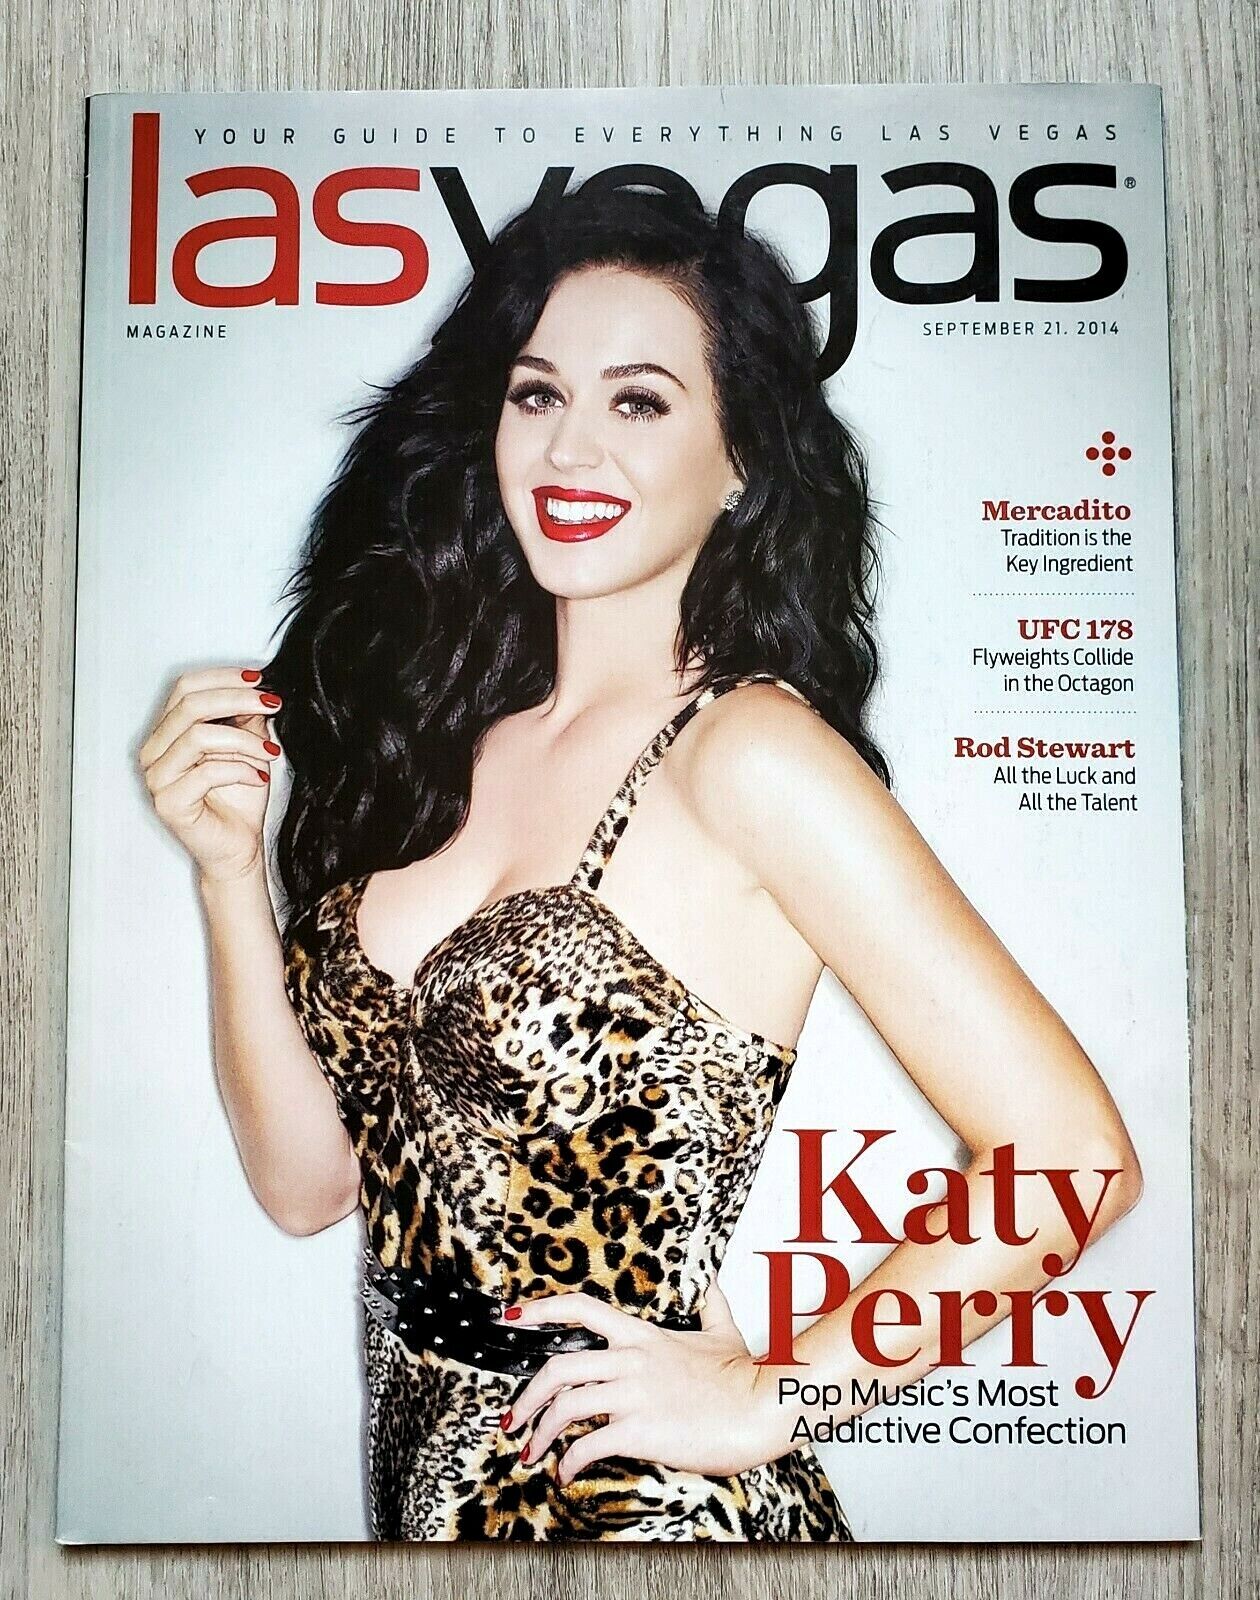 Las Vegas Magazine Featuring Katy Perry - Brand new